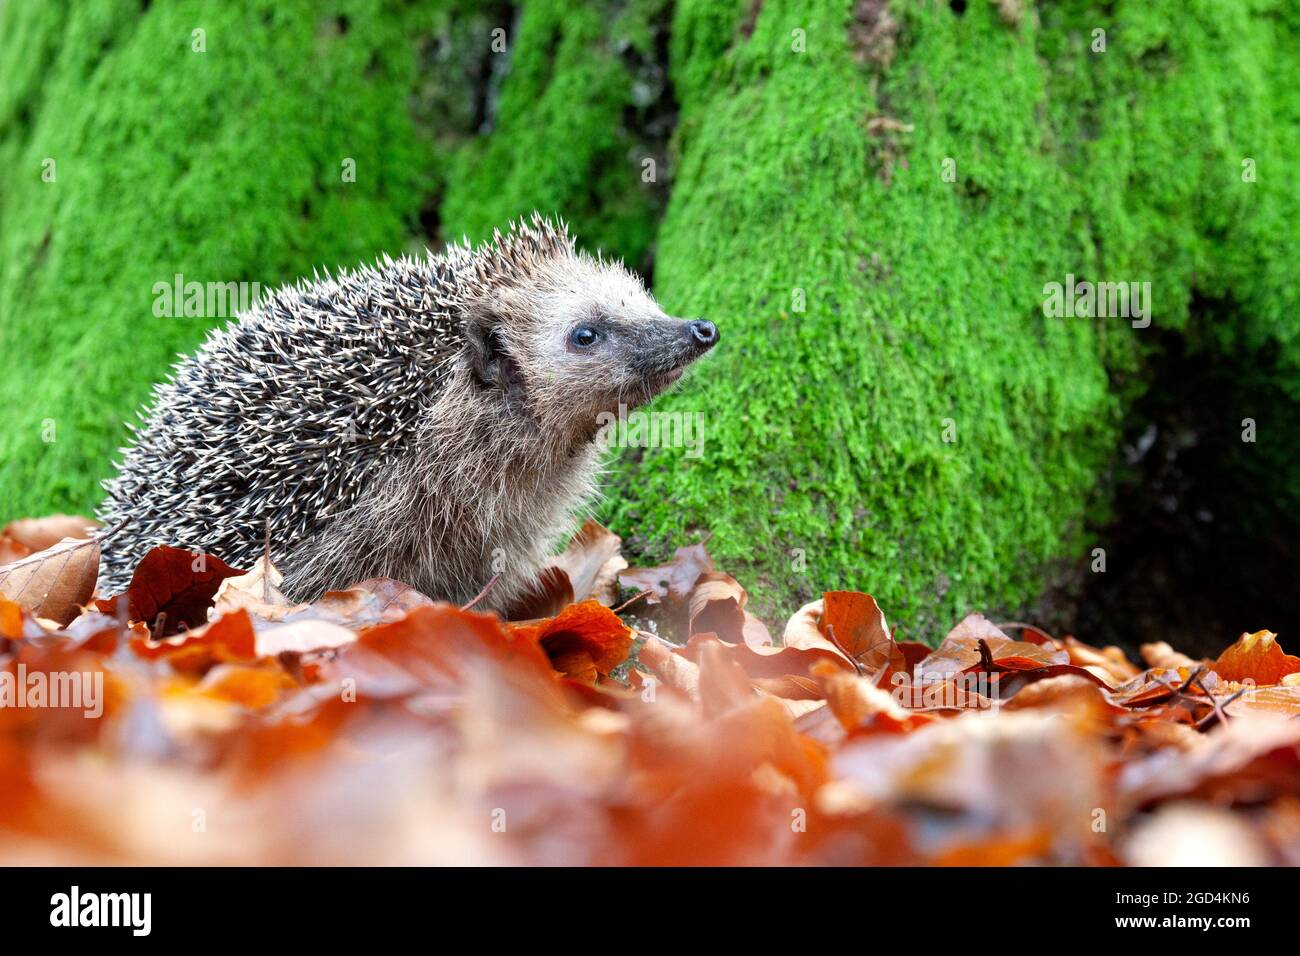 European Hedgehog (Erinaceus europaeus) perched between leaves near a tree in autumn Stock Photo